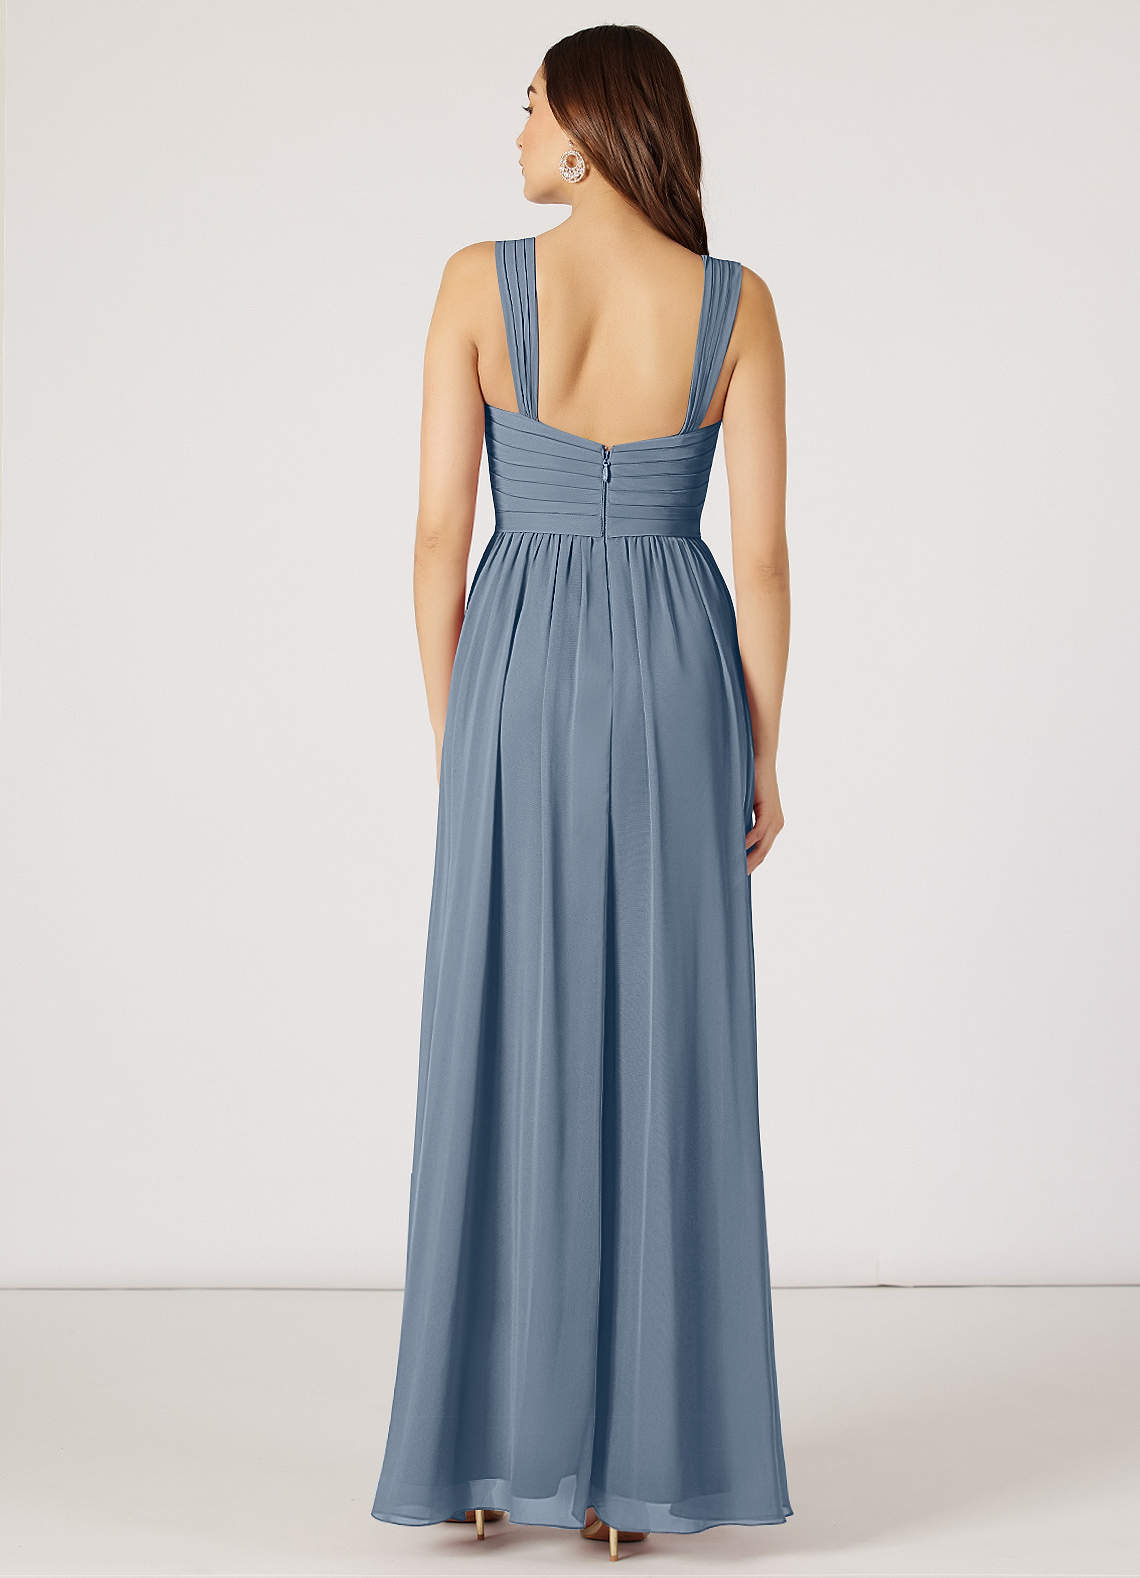 Azazie Evie Bridesmaid Dresses A-Line Sweetheart Neckline Chiffon Floor-Length Dress image1